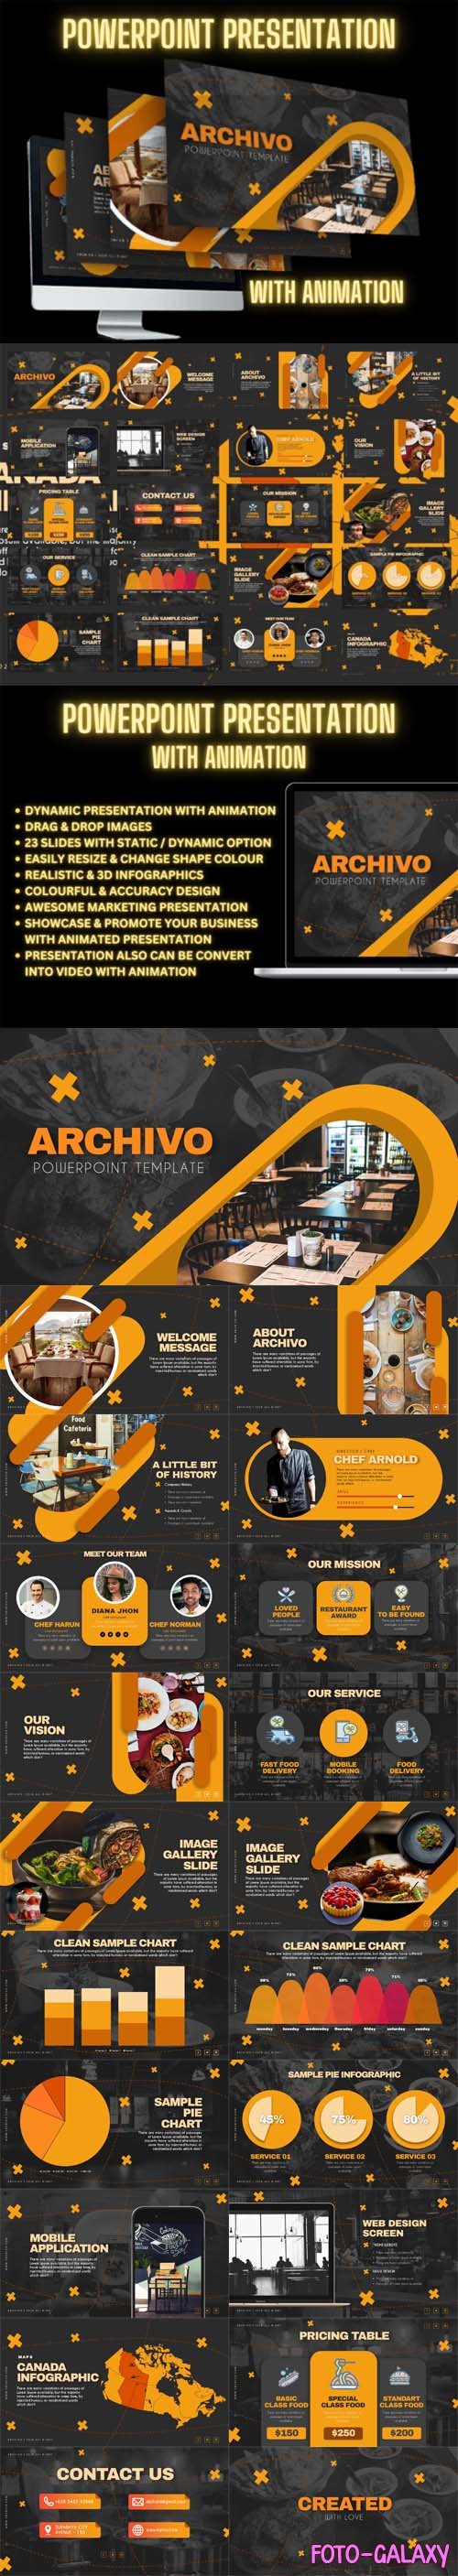 ARCHIVO - Animated PowerPoint Presentation Template